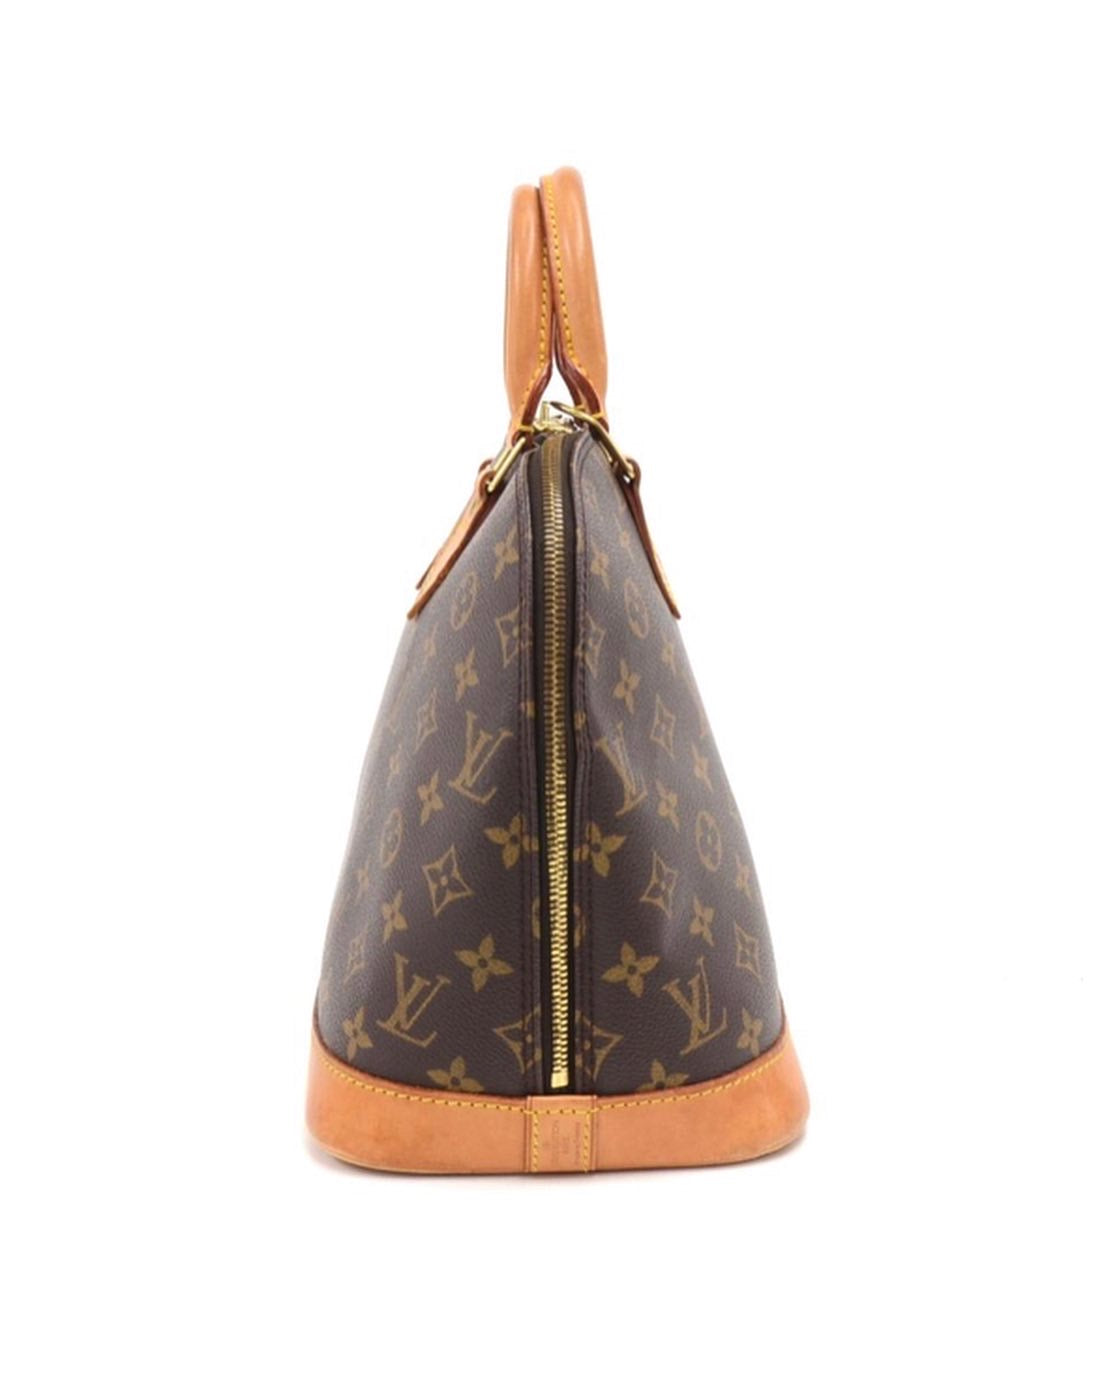 Luois Vuitton Alma Vintage Monogram Handbag Brown – Iapello Arts & Antiques